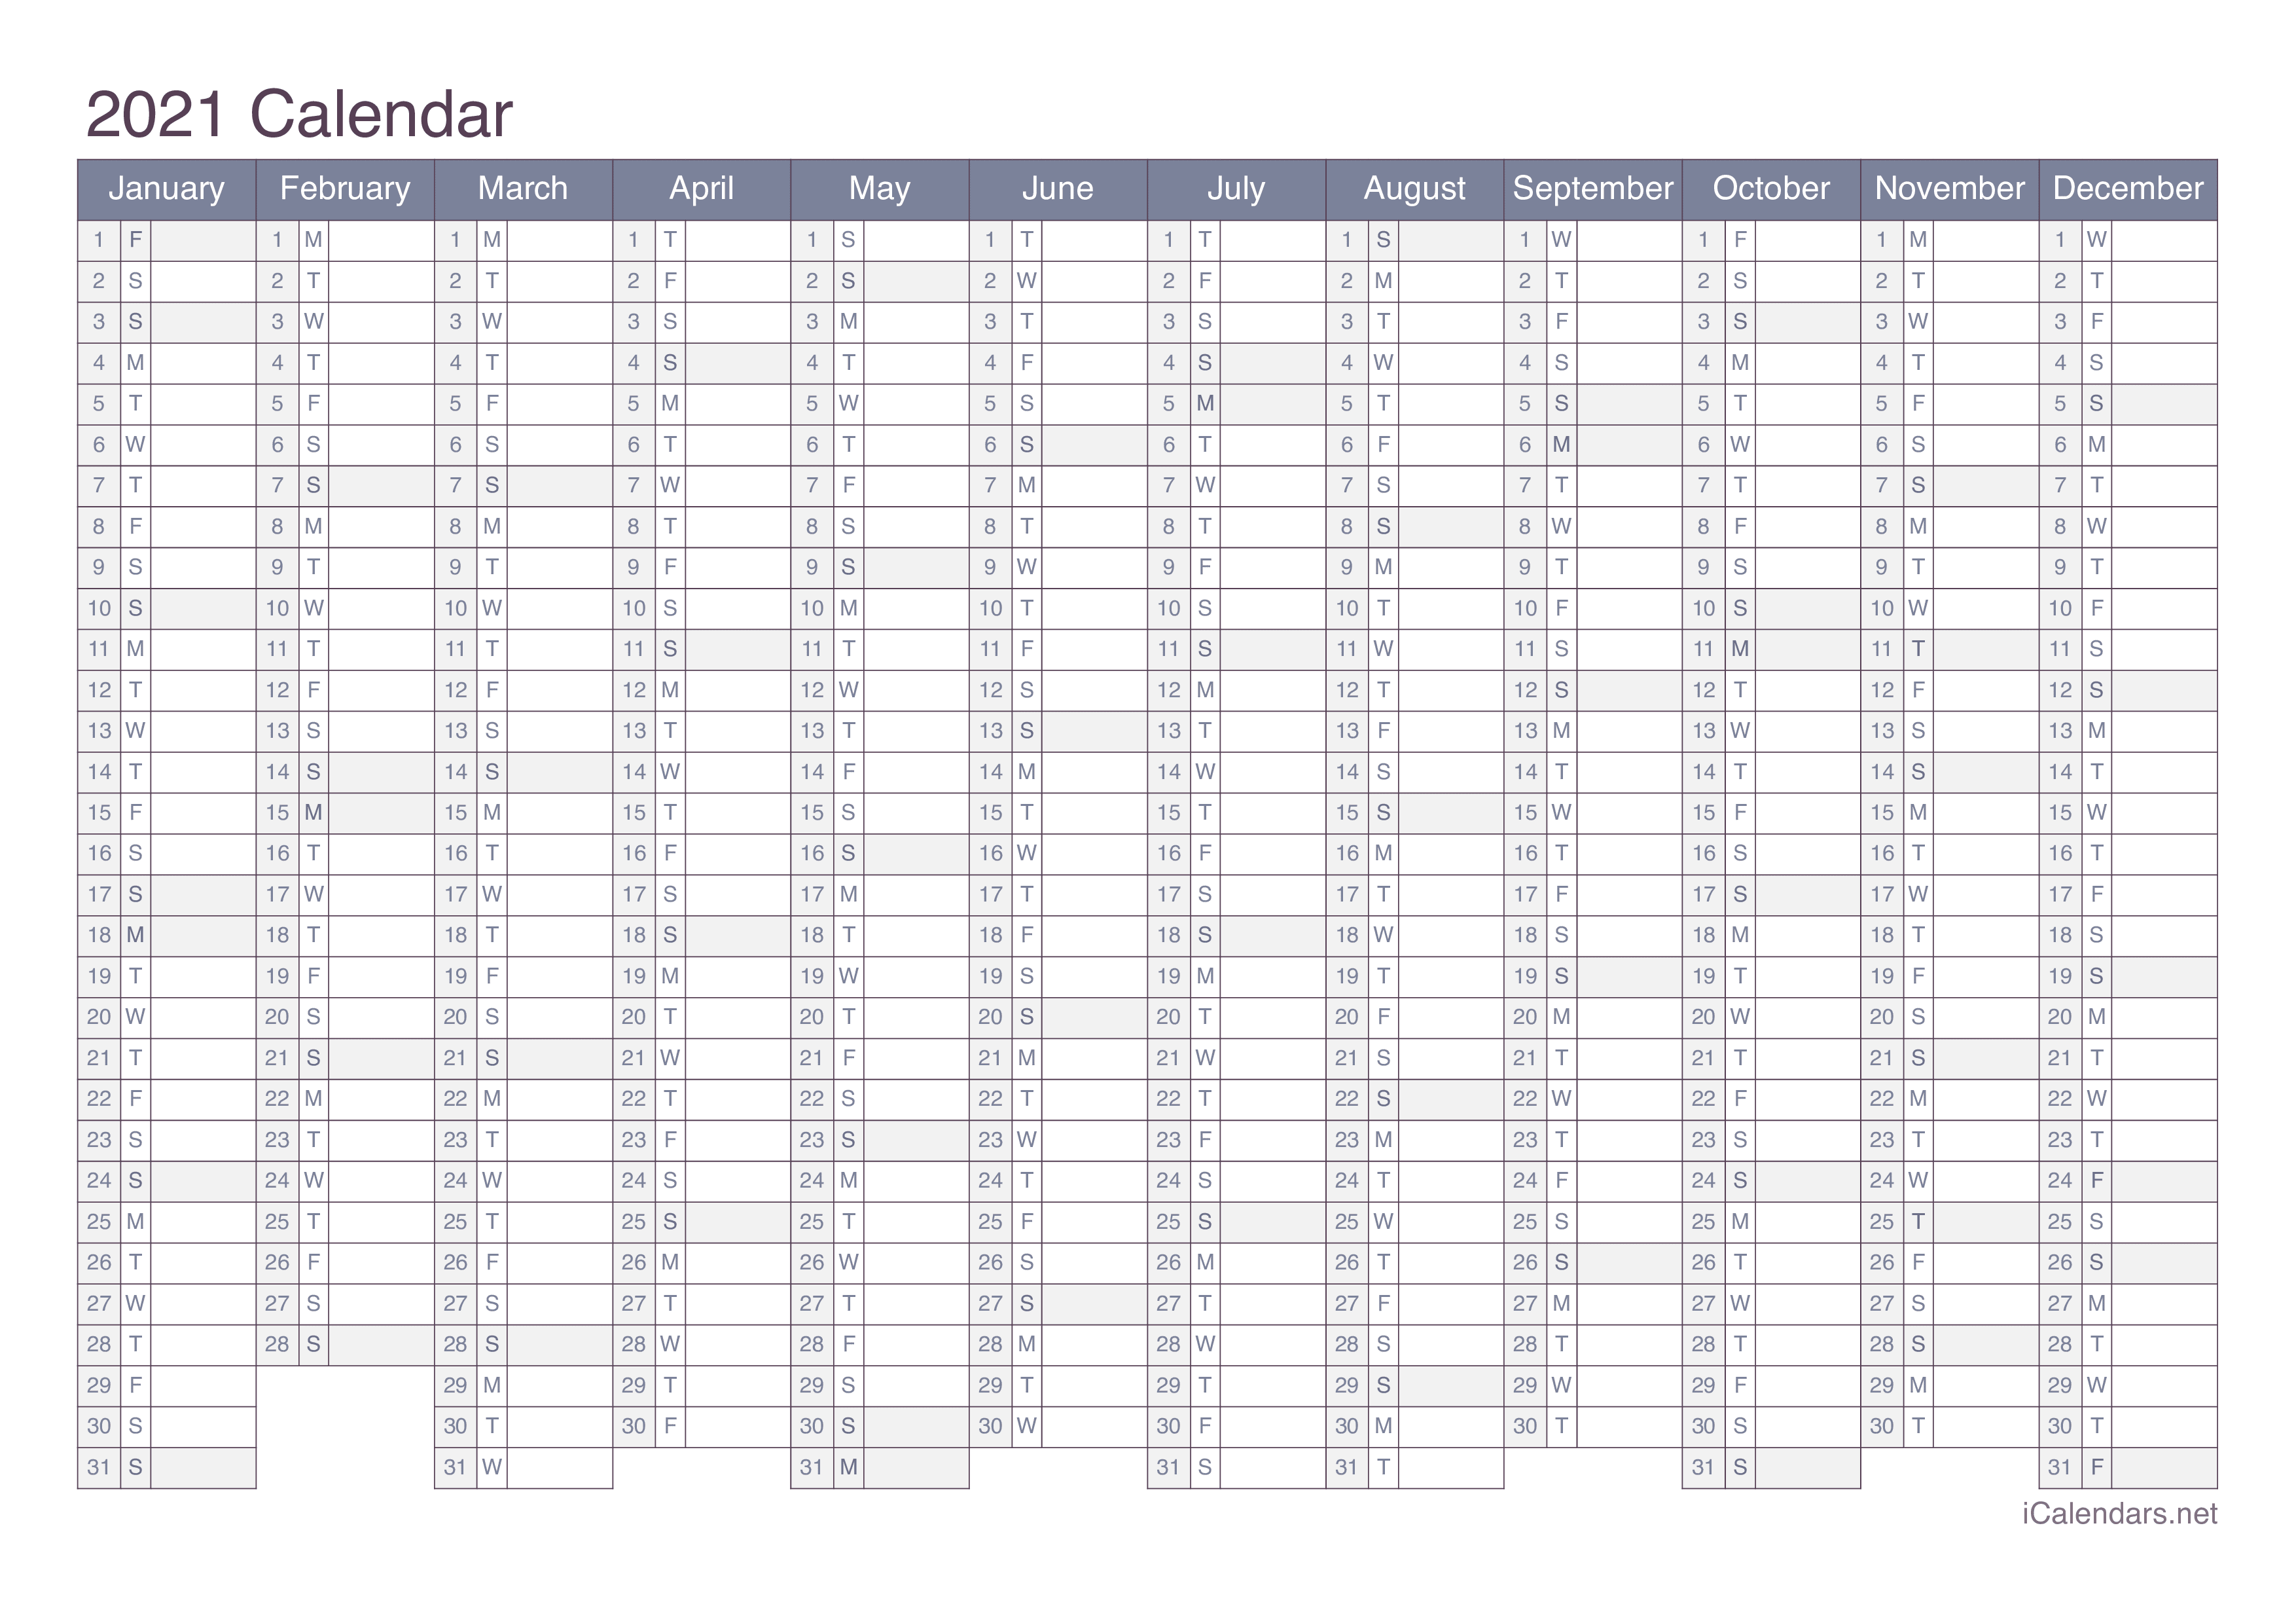 2021 Printable Calendar - PDF or Excel - icalendars.net